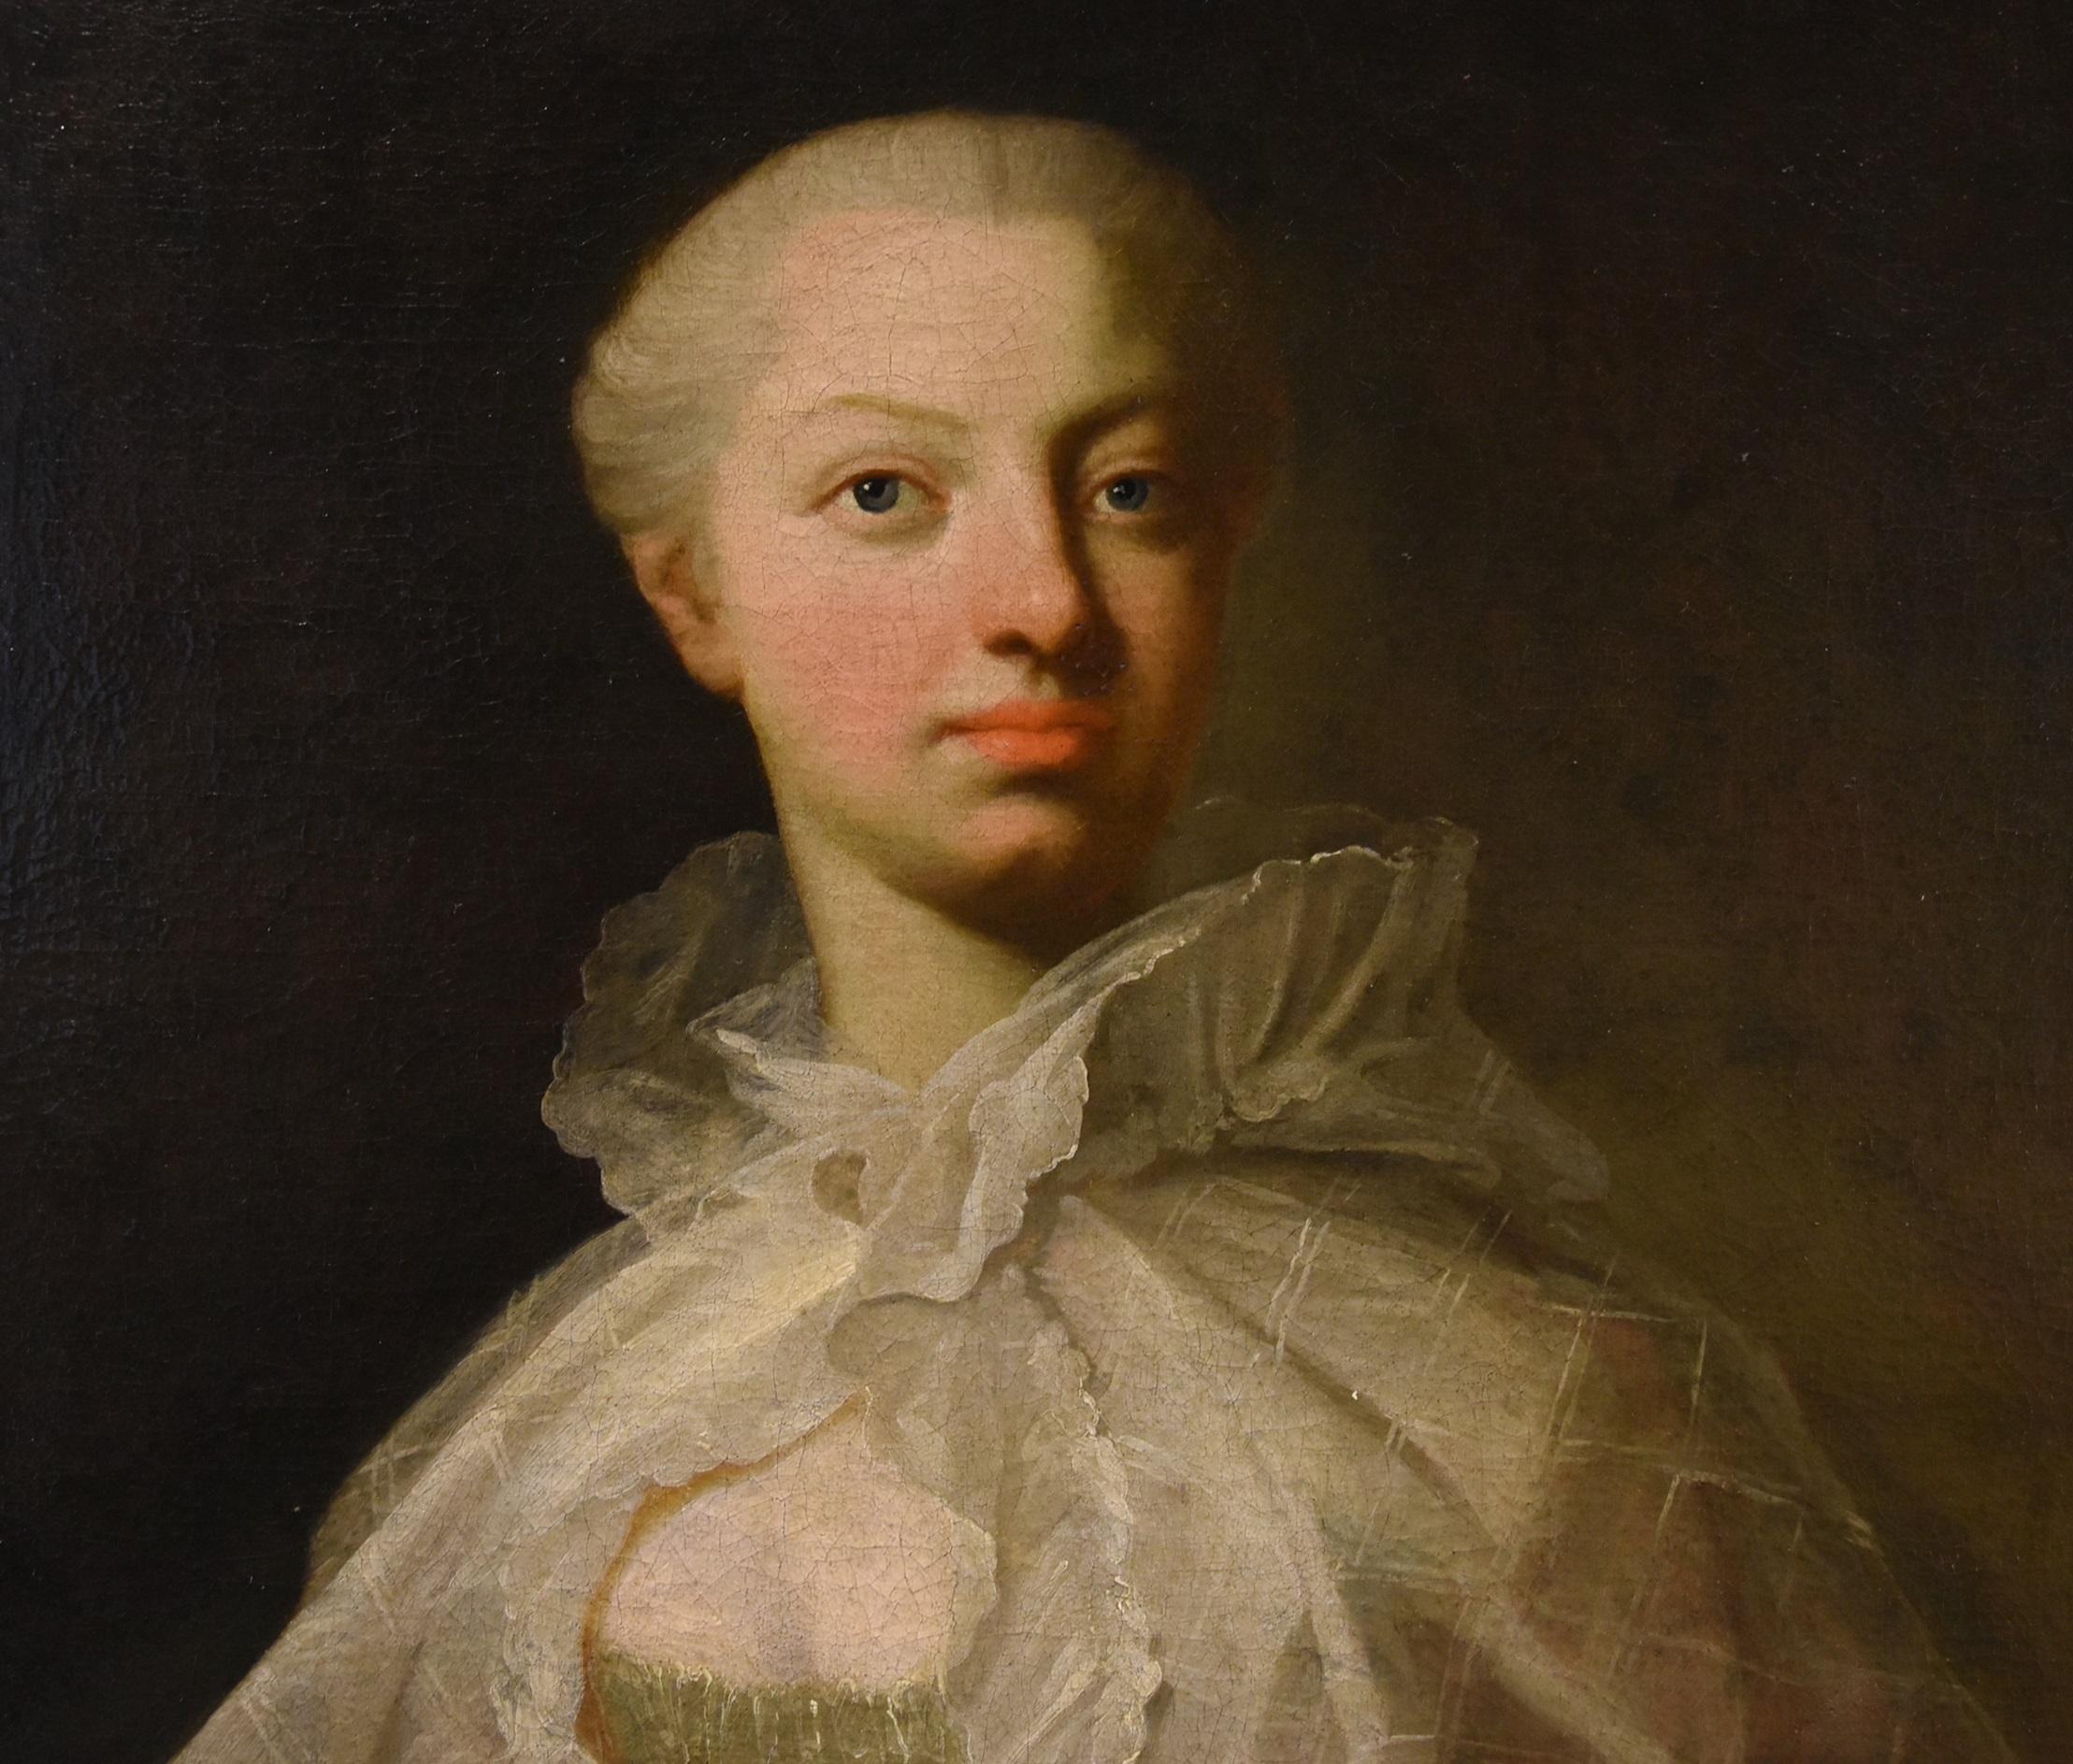 Portrait Noblewoman Dog Van Loo Paint 18th Century Oil on canvas Old master Art For Sale 4